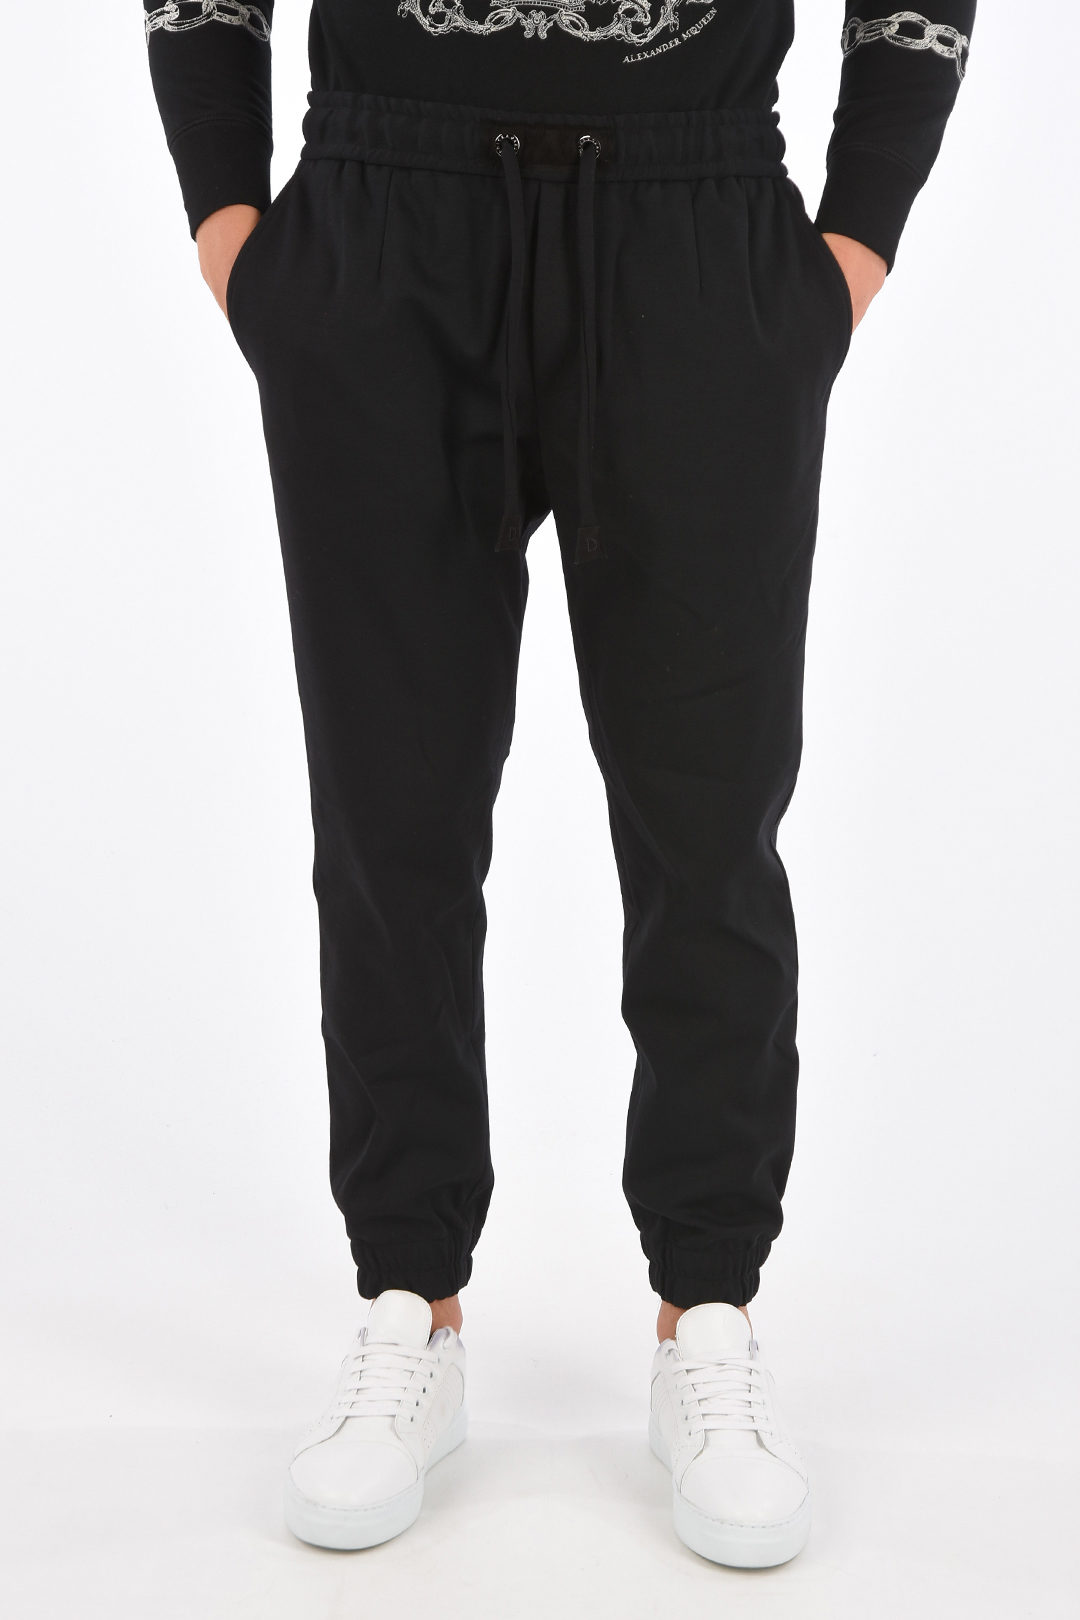 Dolce & Gabbana drawstring waist pants men - Glamood Outlet